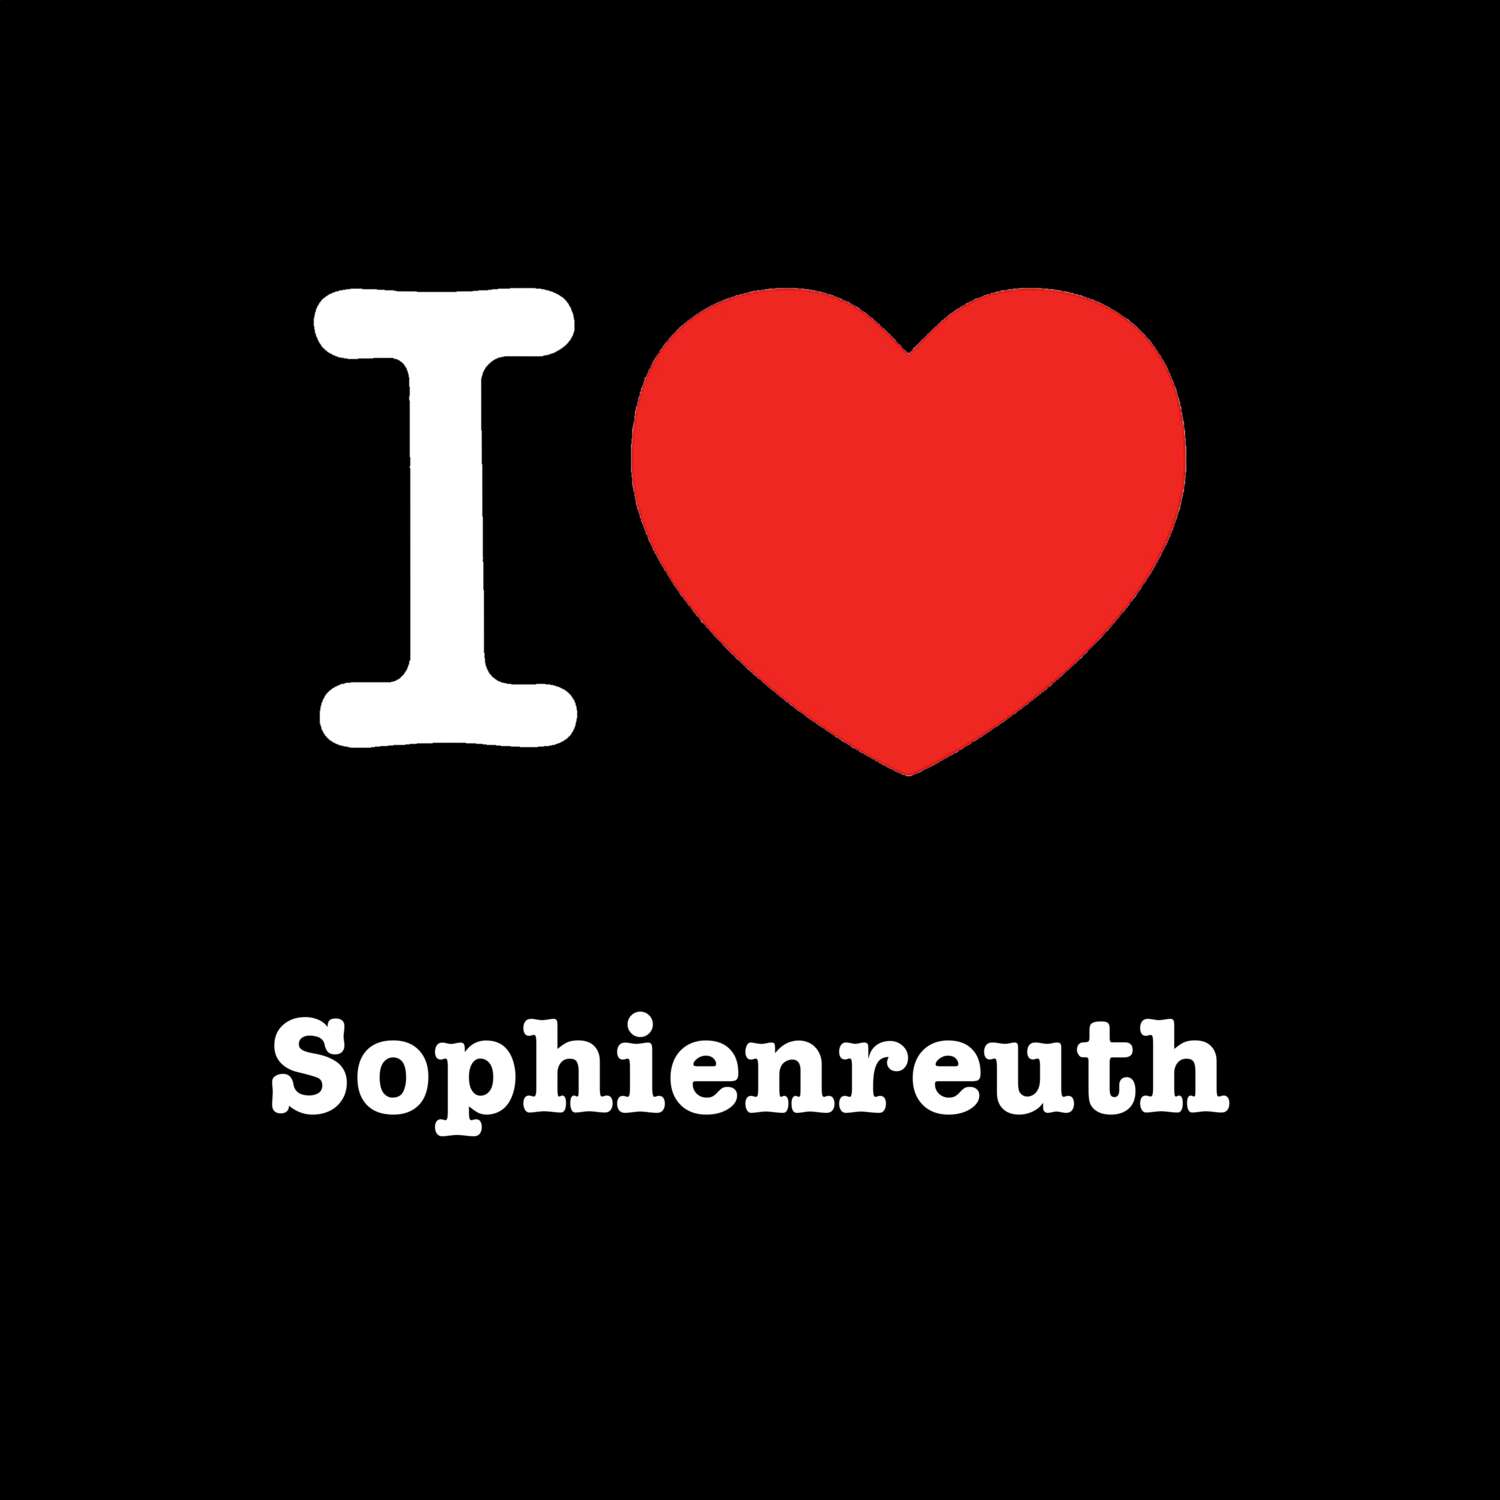 Sophienreuth T-Shirt »I love«